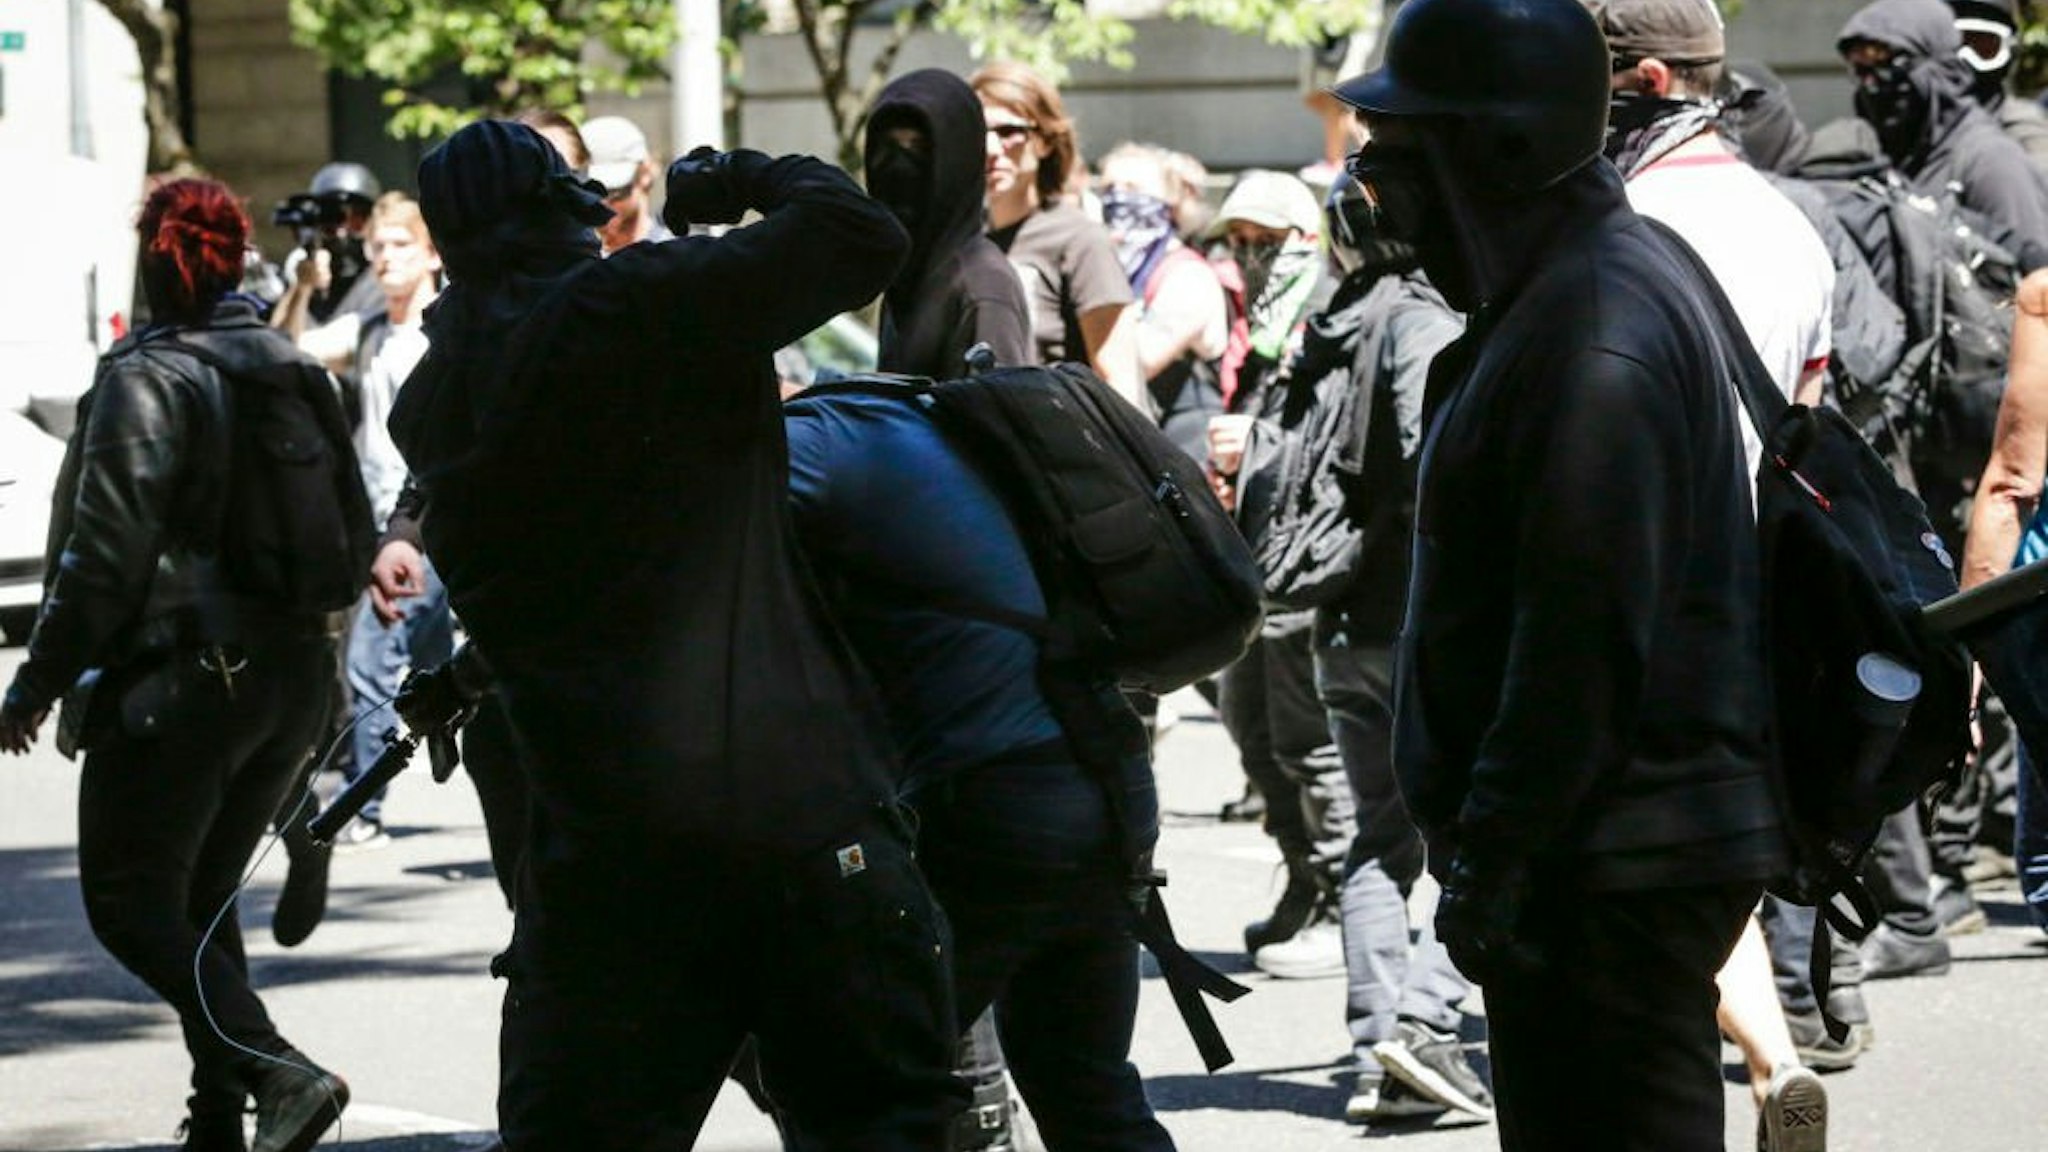 Unidentified Rose City Antifa members beat up Andy Ngo, a Portland-based journalist, on June 29, 2019 in Portland, Oregon.